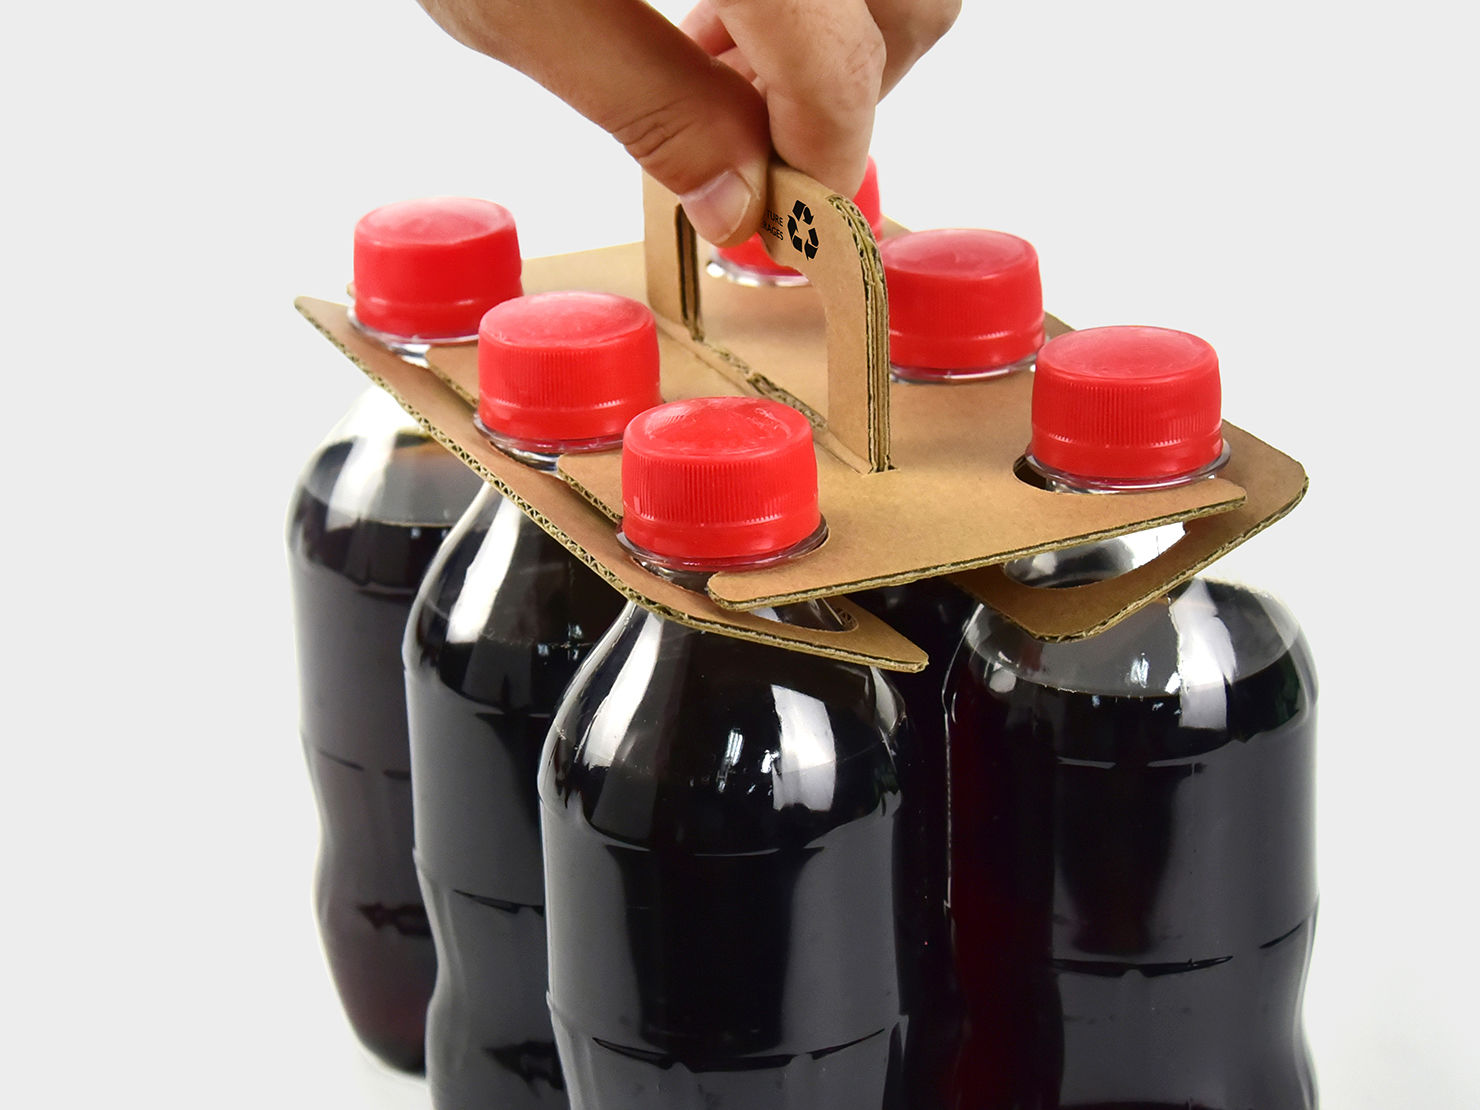 Packaging structure of bottled beverages